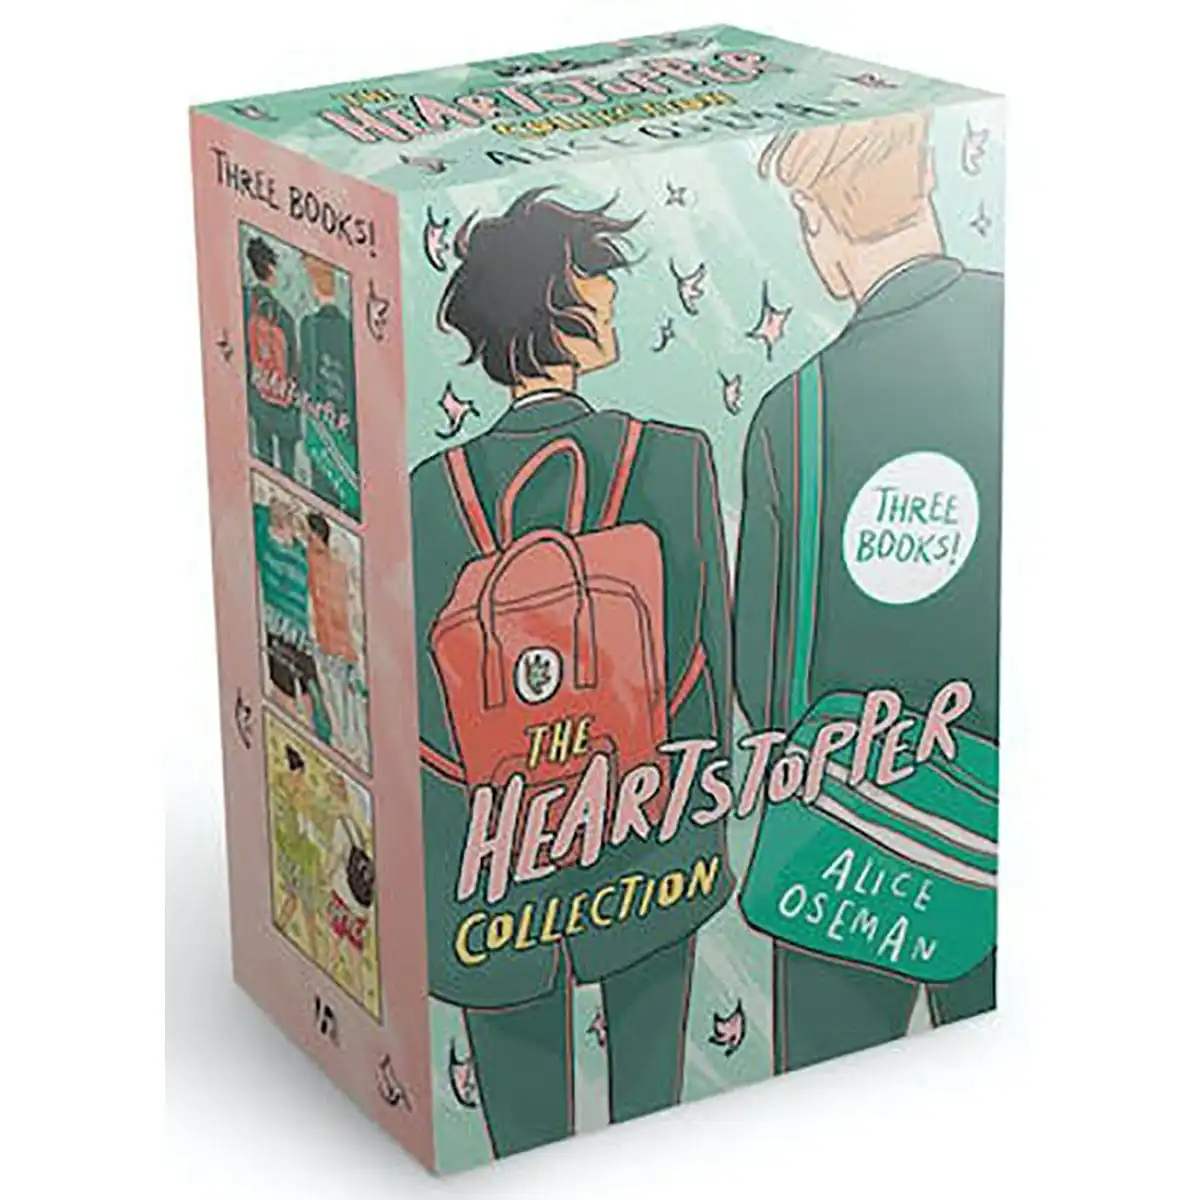 Heartstopper Collection - 3 Copy Box Set